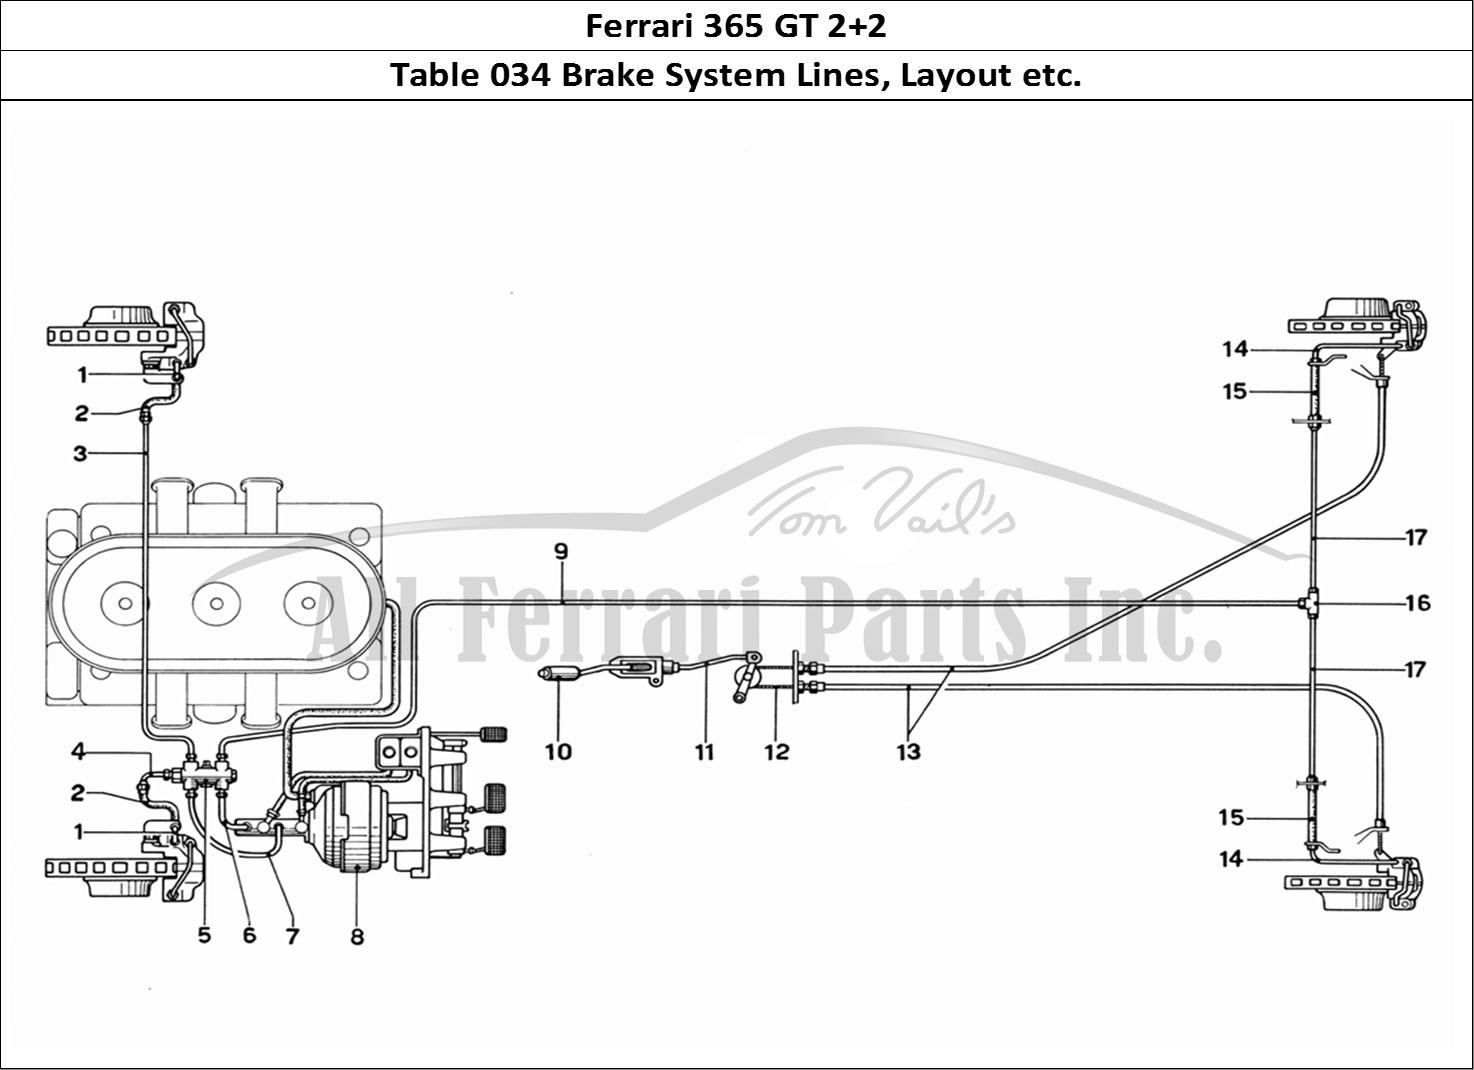 Ferrari Parts Ferrari 365 GT 2+2 (Mechanical) Page 034 Brake System Scheme